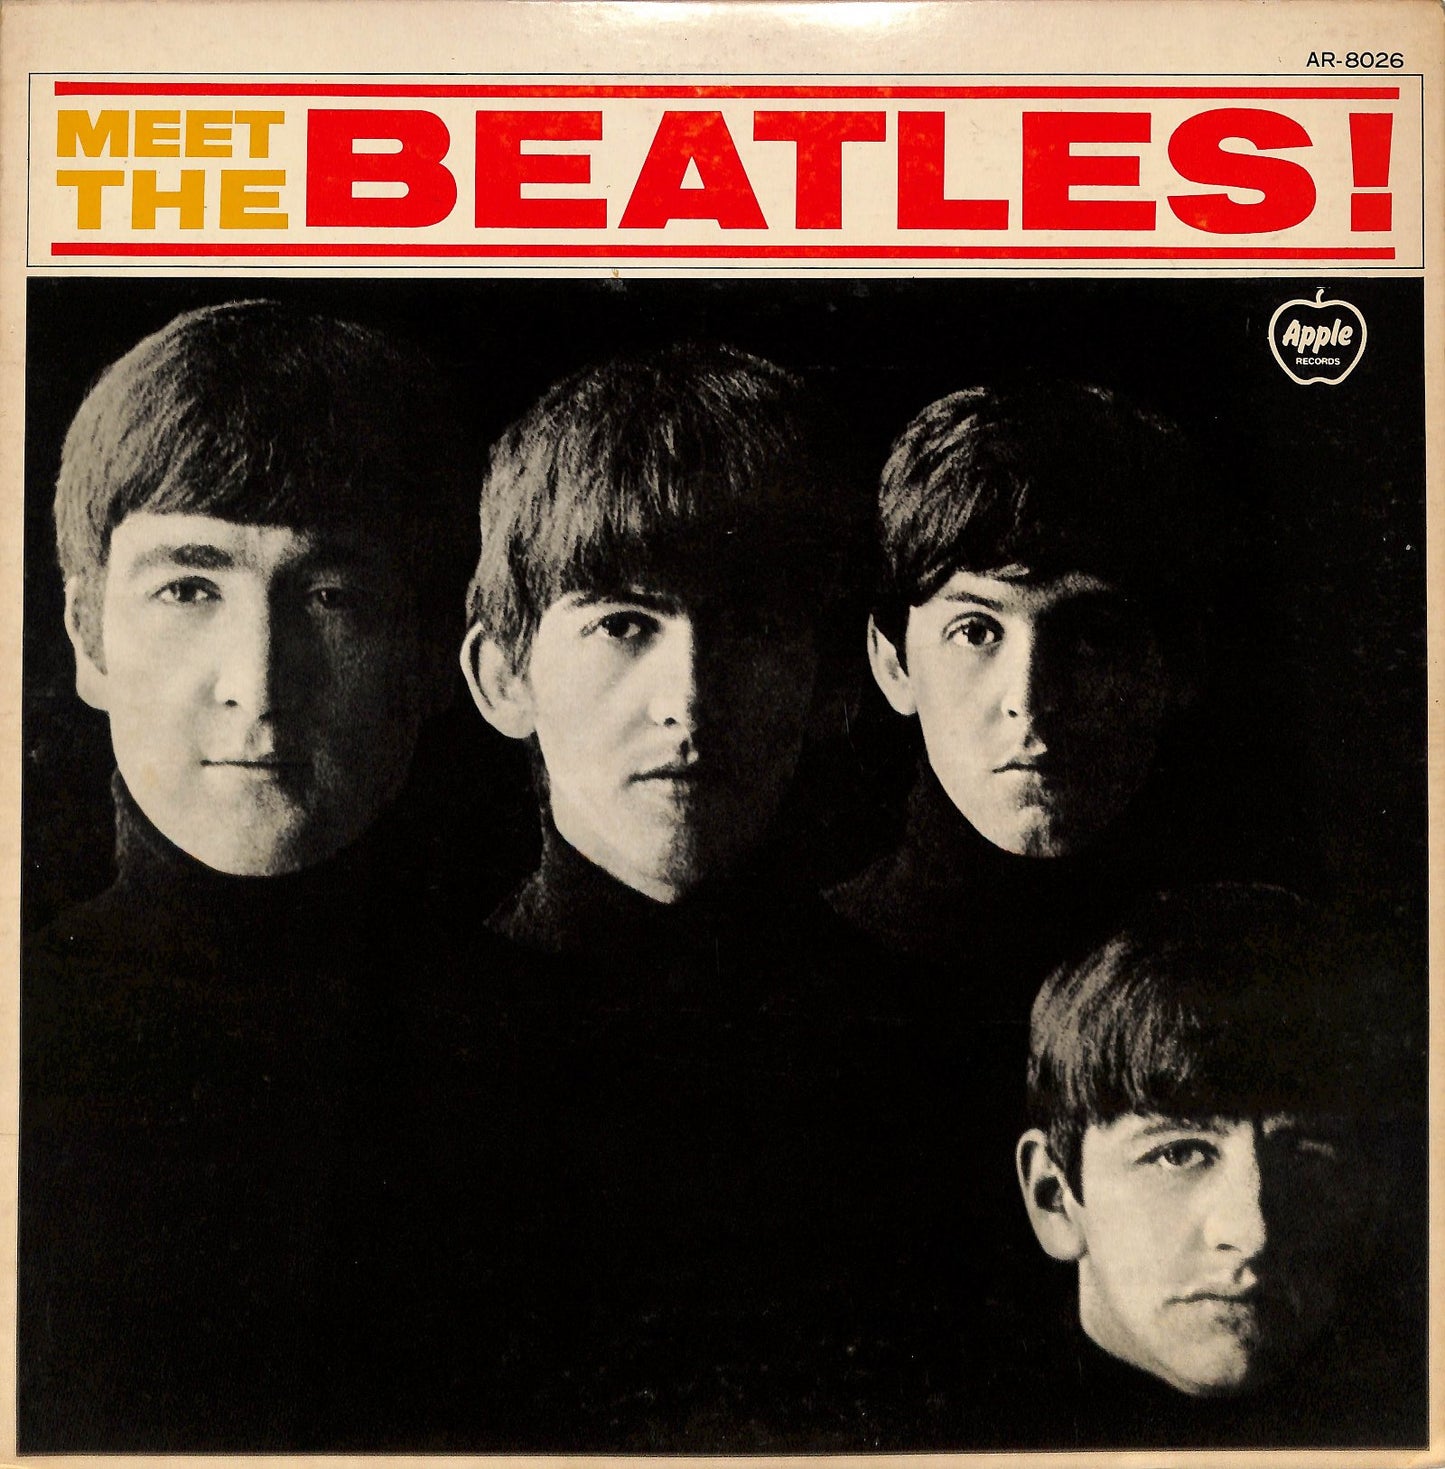 THE BEATLES - Meet The Beatles